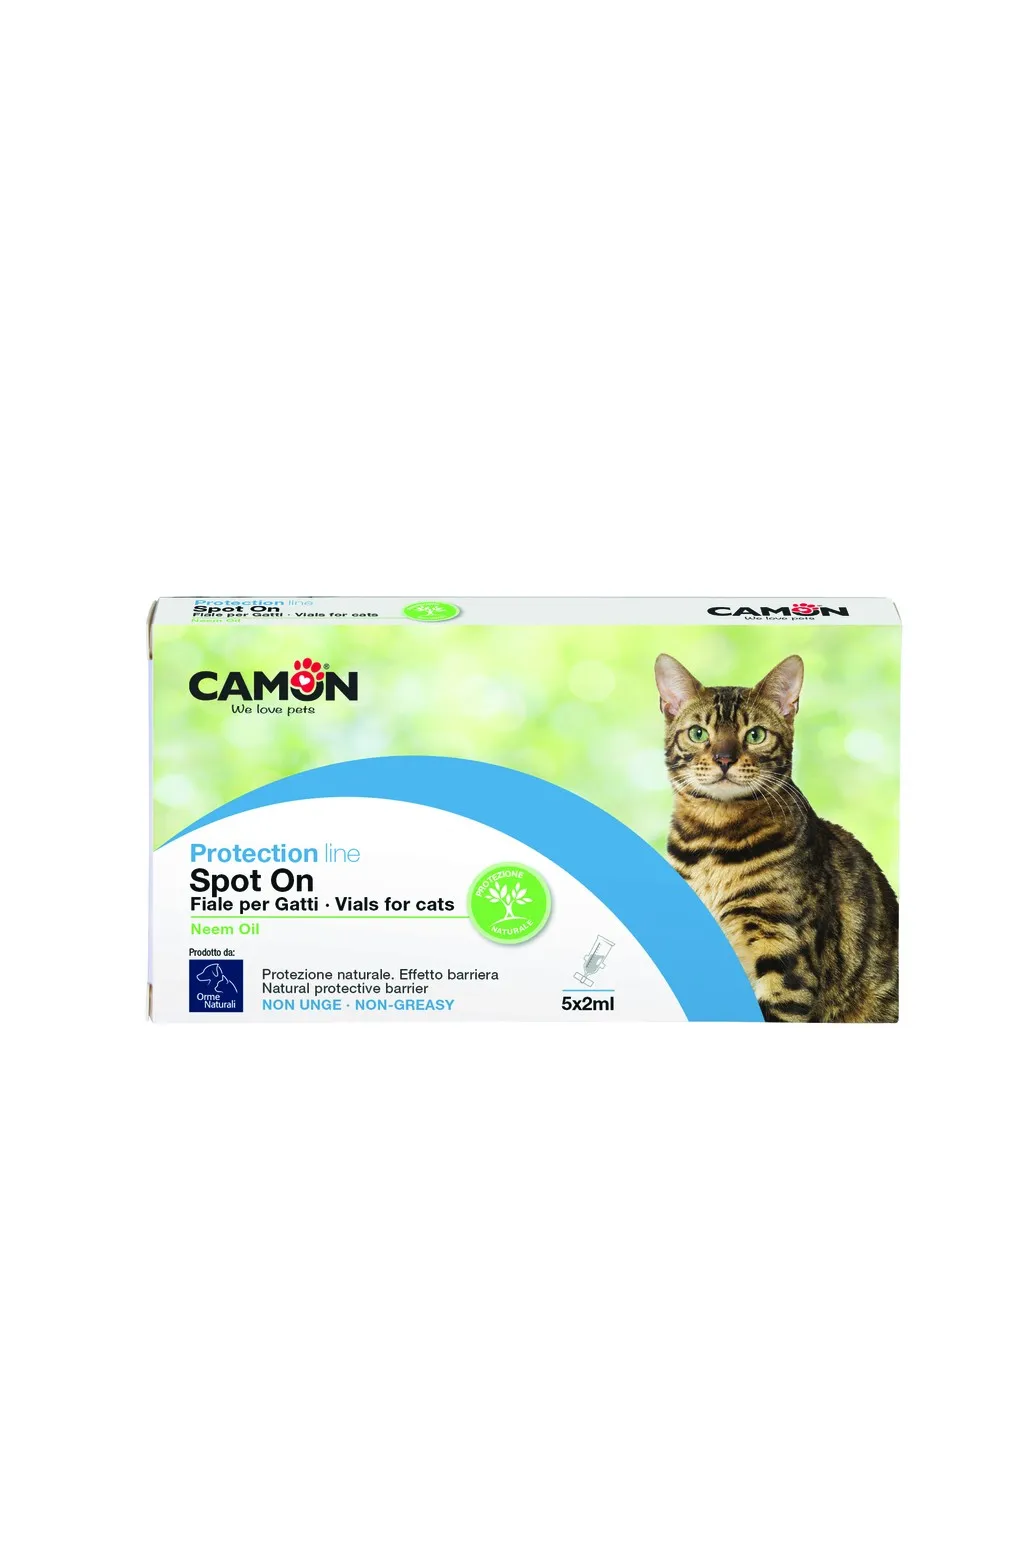 Camon Ormenaturali Spot on with neem oil for cats - противопаразитна защита с нимово масло за котки, 5/2мл броя пипети 3